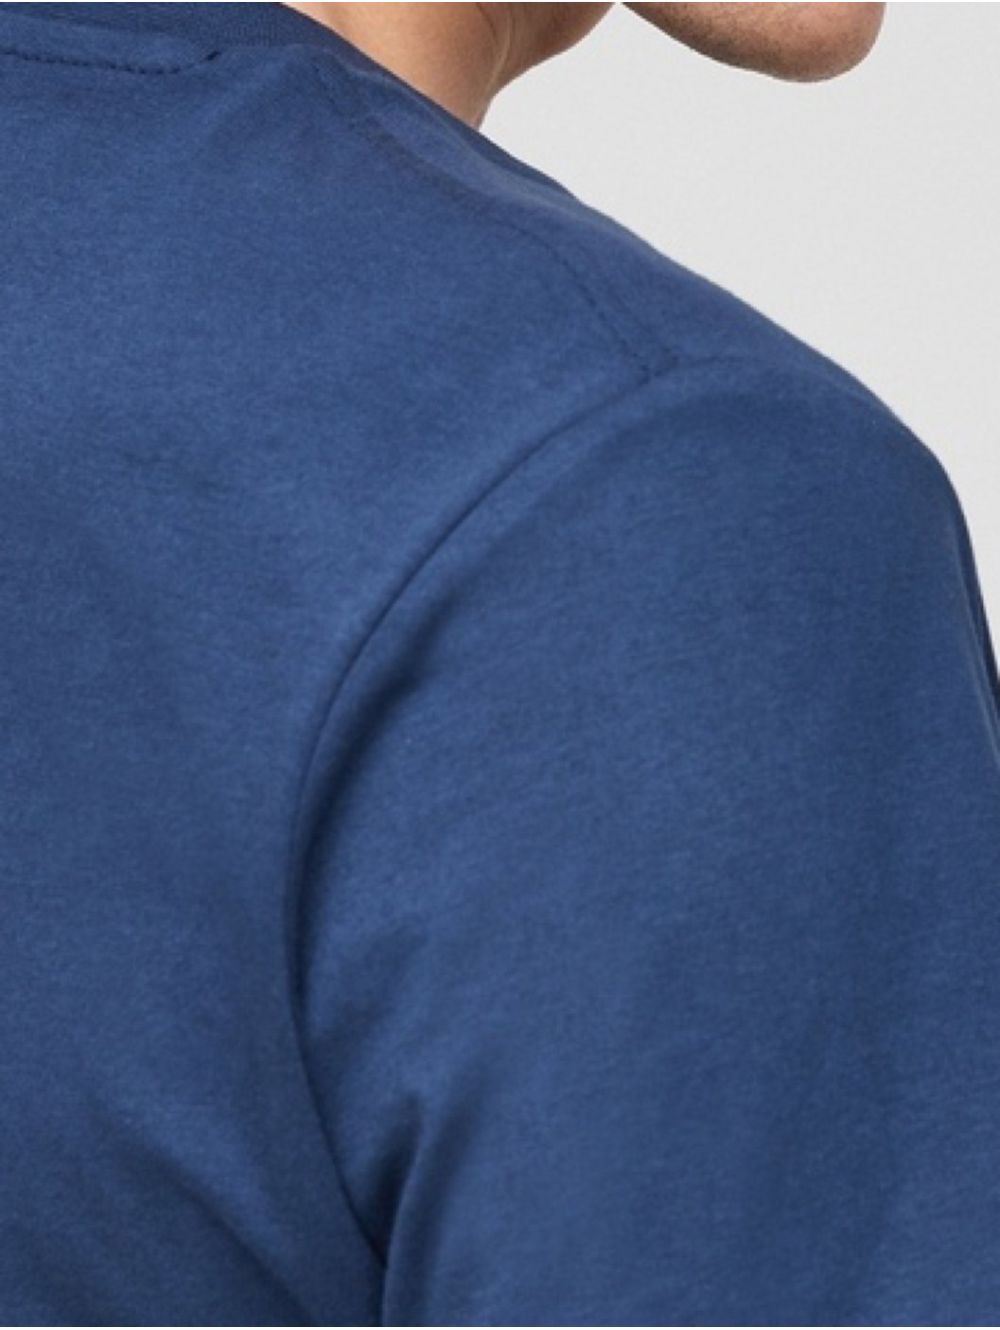 Ocean 2057432-5693 T-Shirt jersey blue short-sleeved S.OLIVER Men\'s Blue